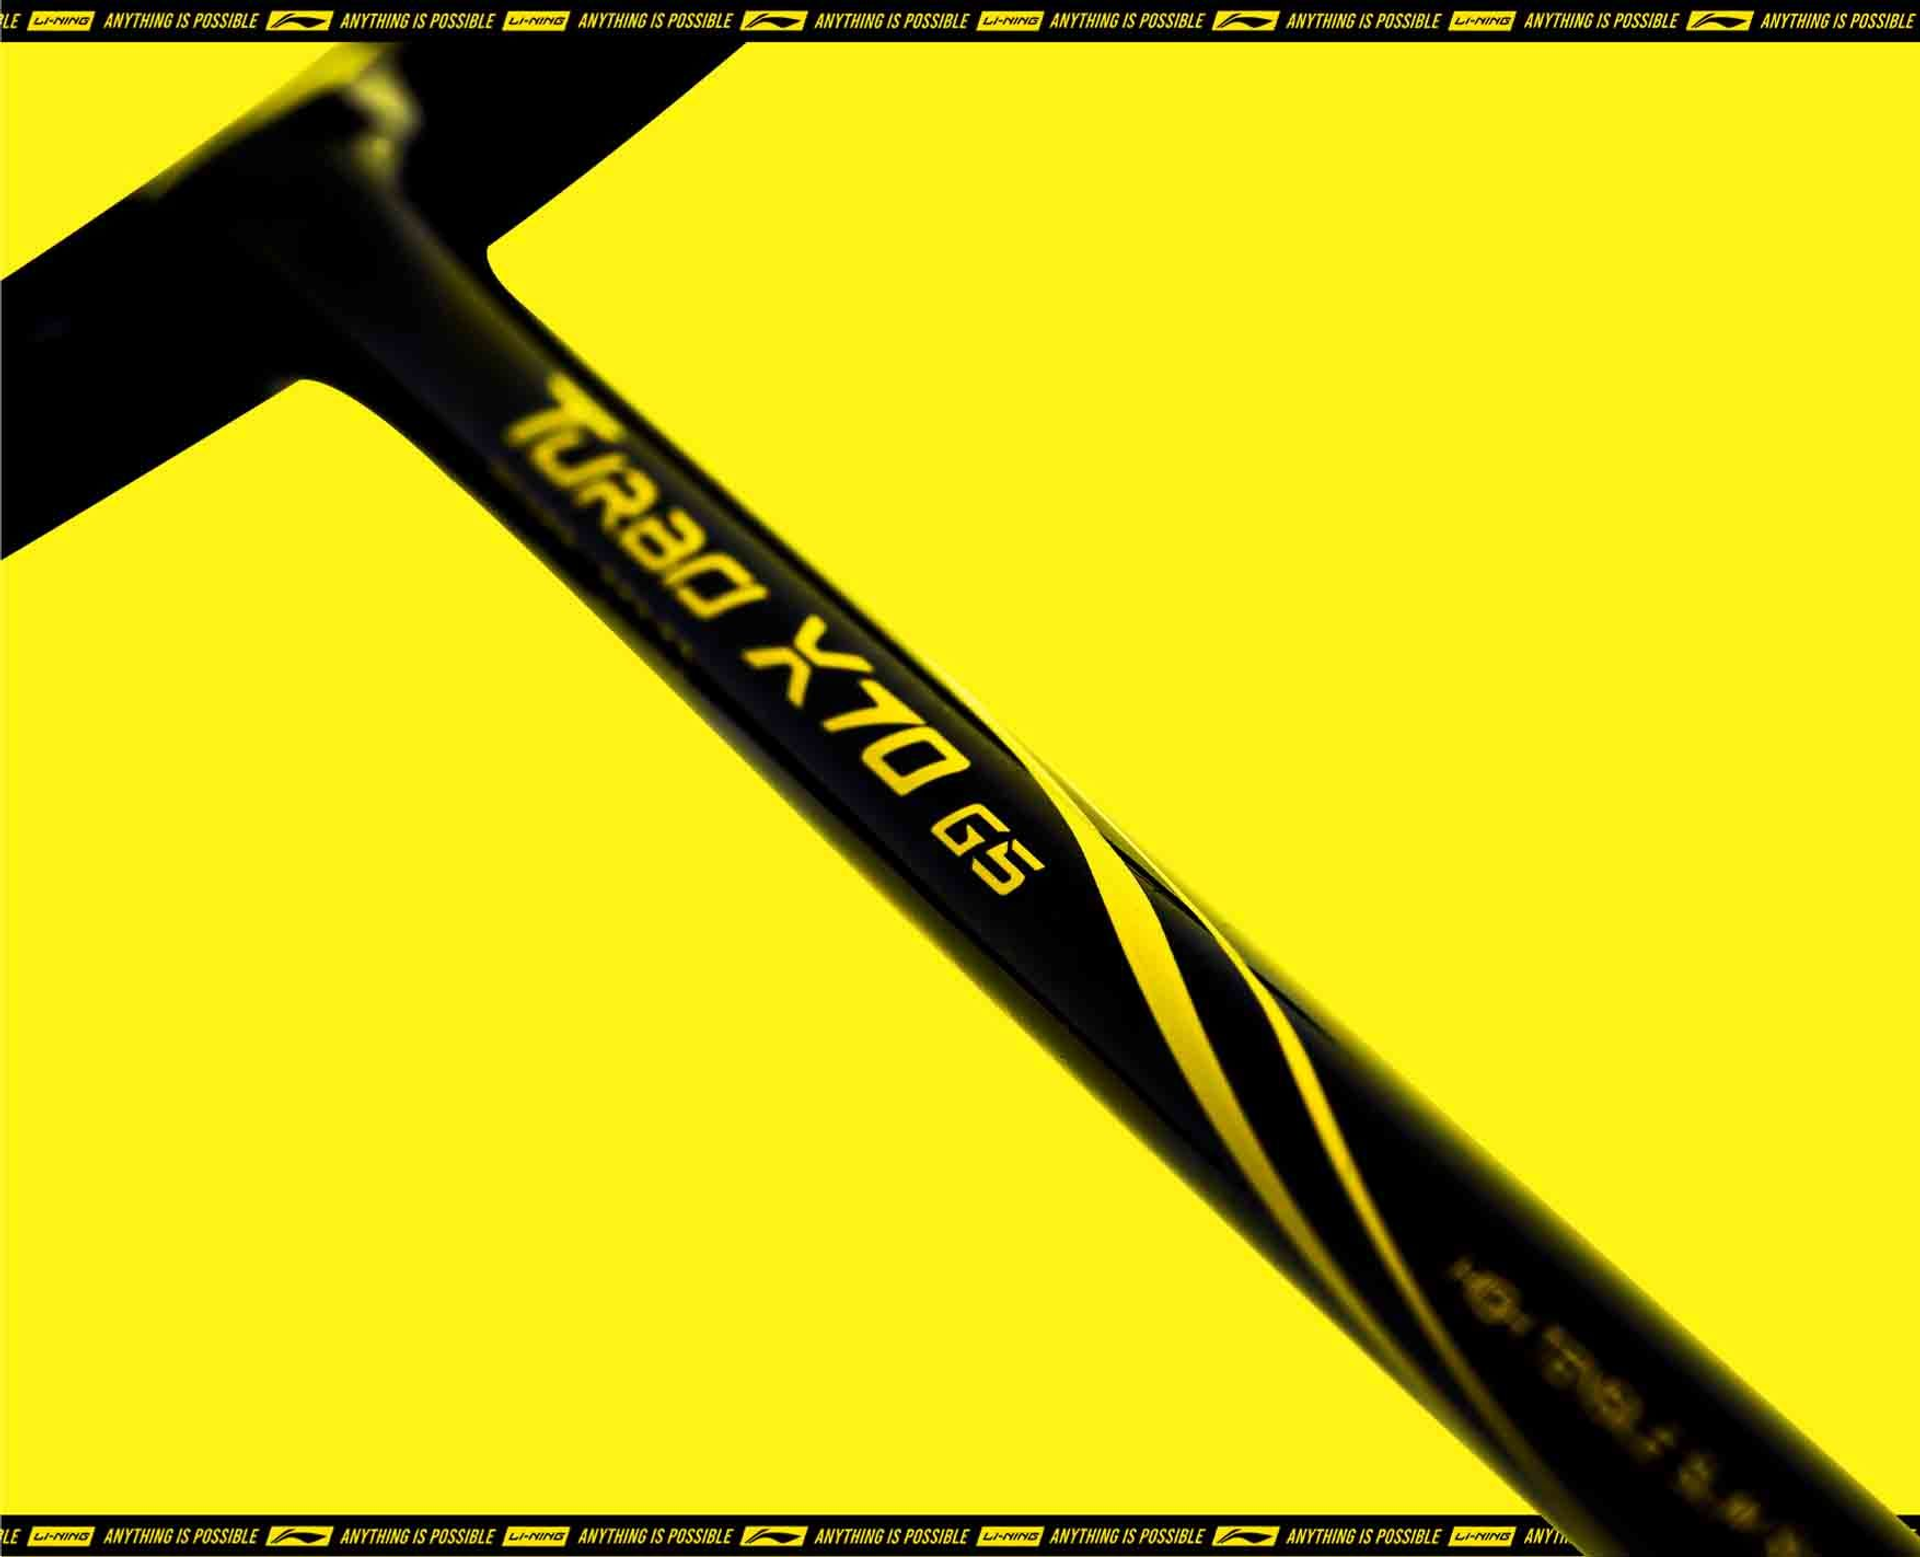 Close up of Turbo X G5 Power series badminton racket shaft by Li-Ning Studio